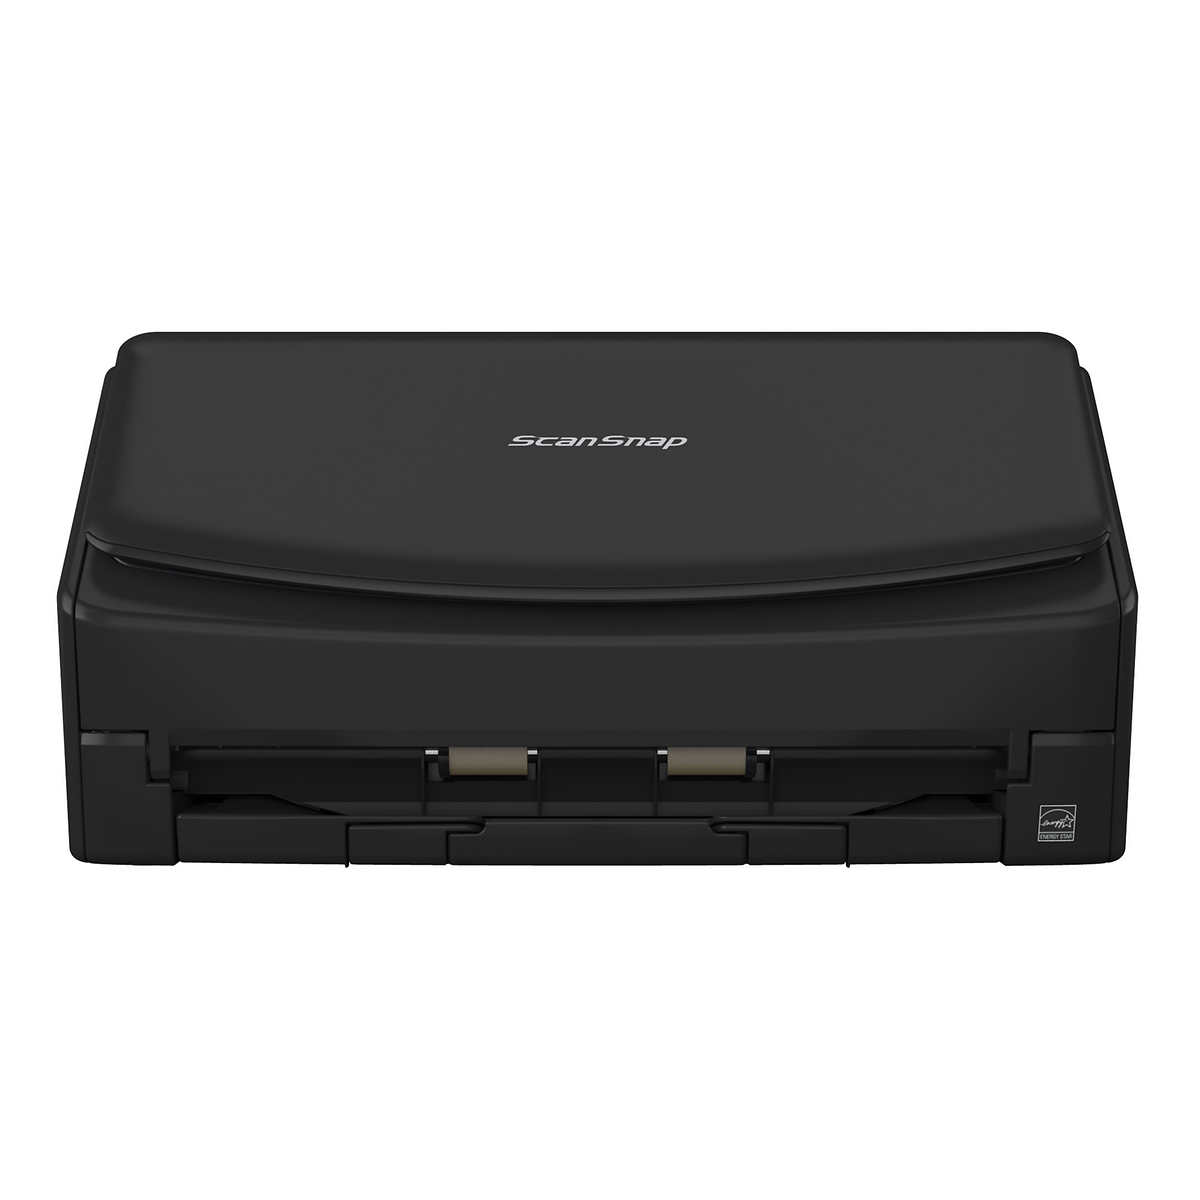 Fujitsu ScanSnap iX1400 Scanner | Costco